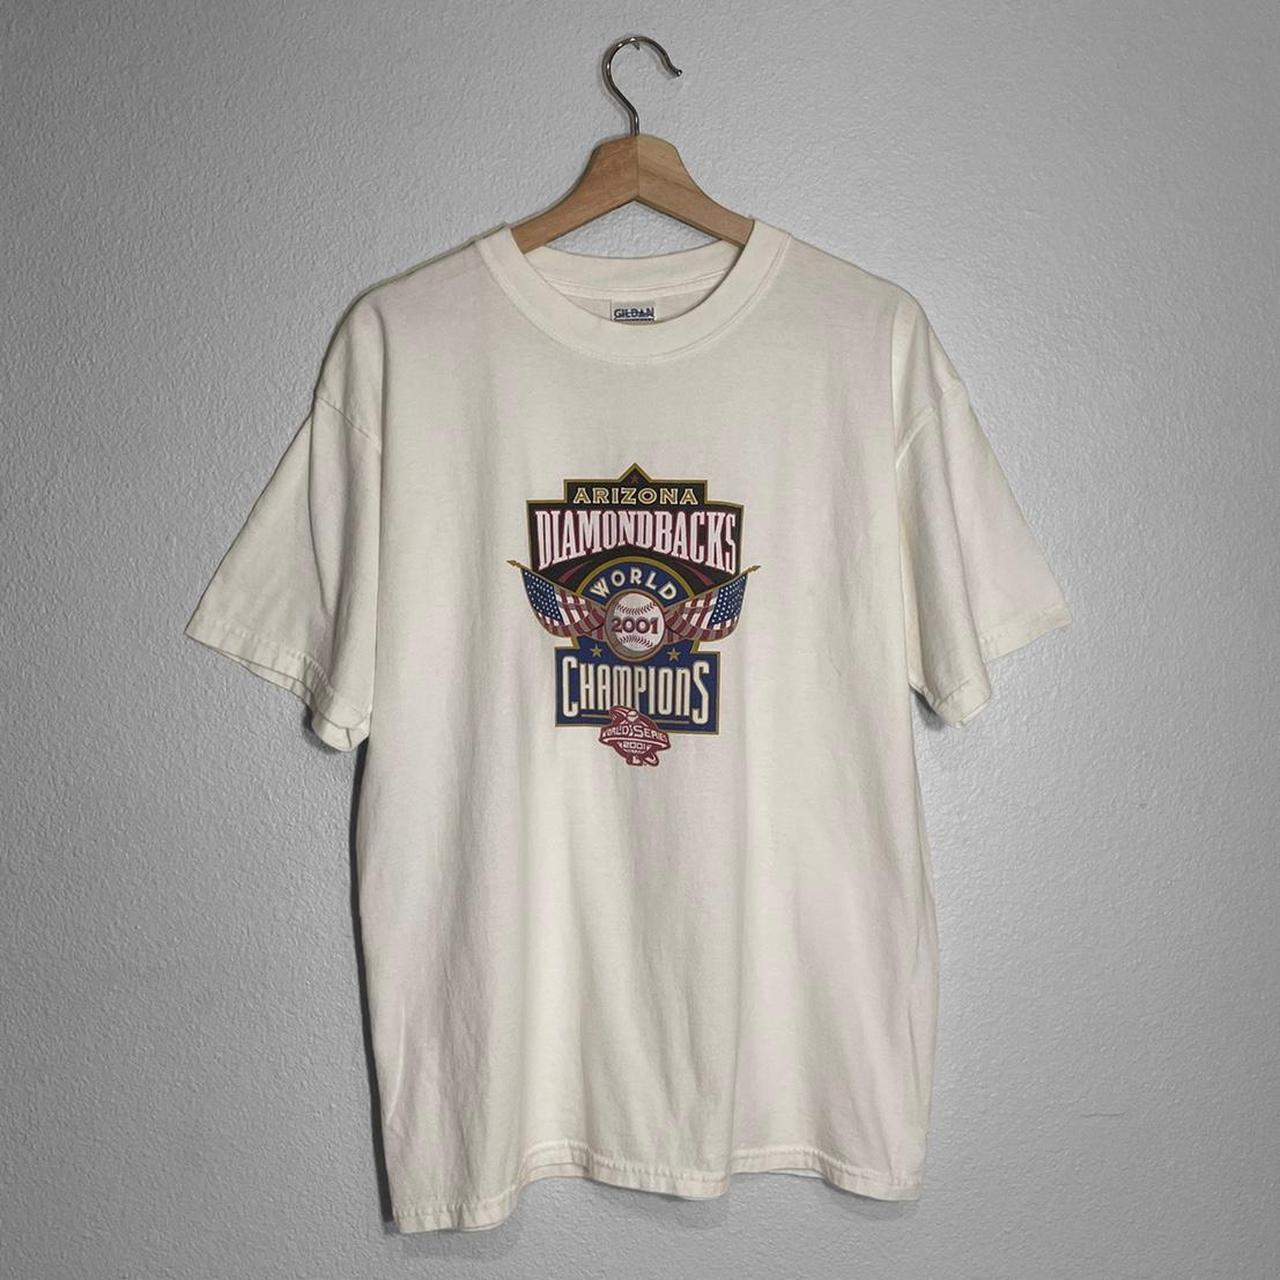 Vintage Arizona Diamondbacks Shirt 2001 World Series - Depop